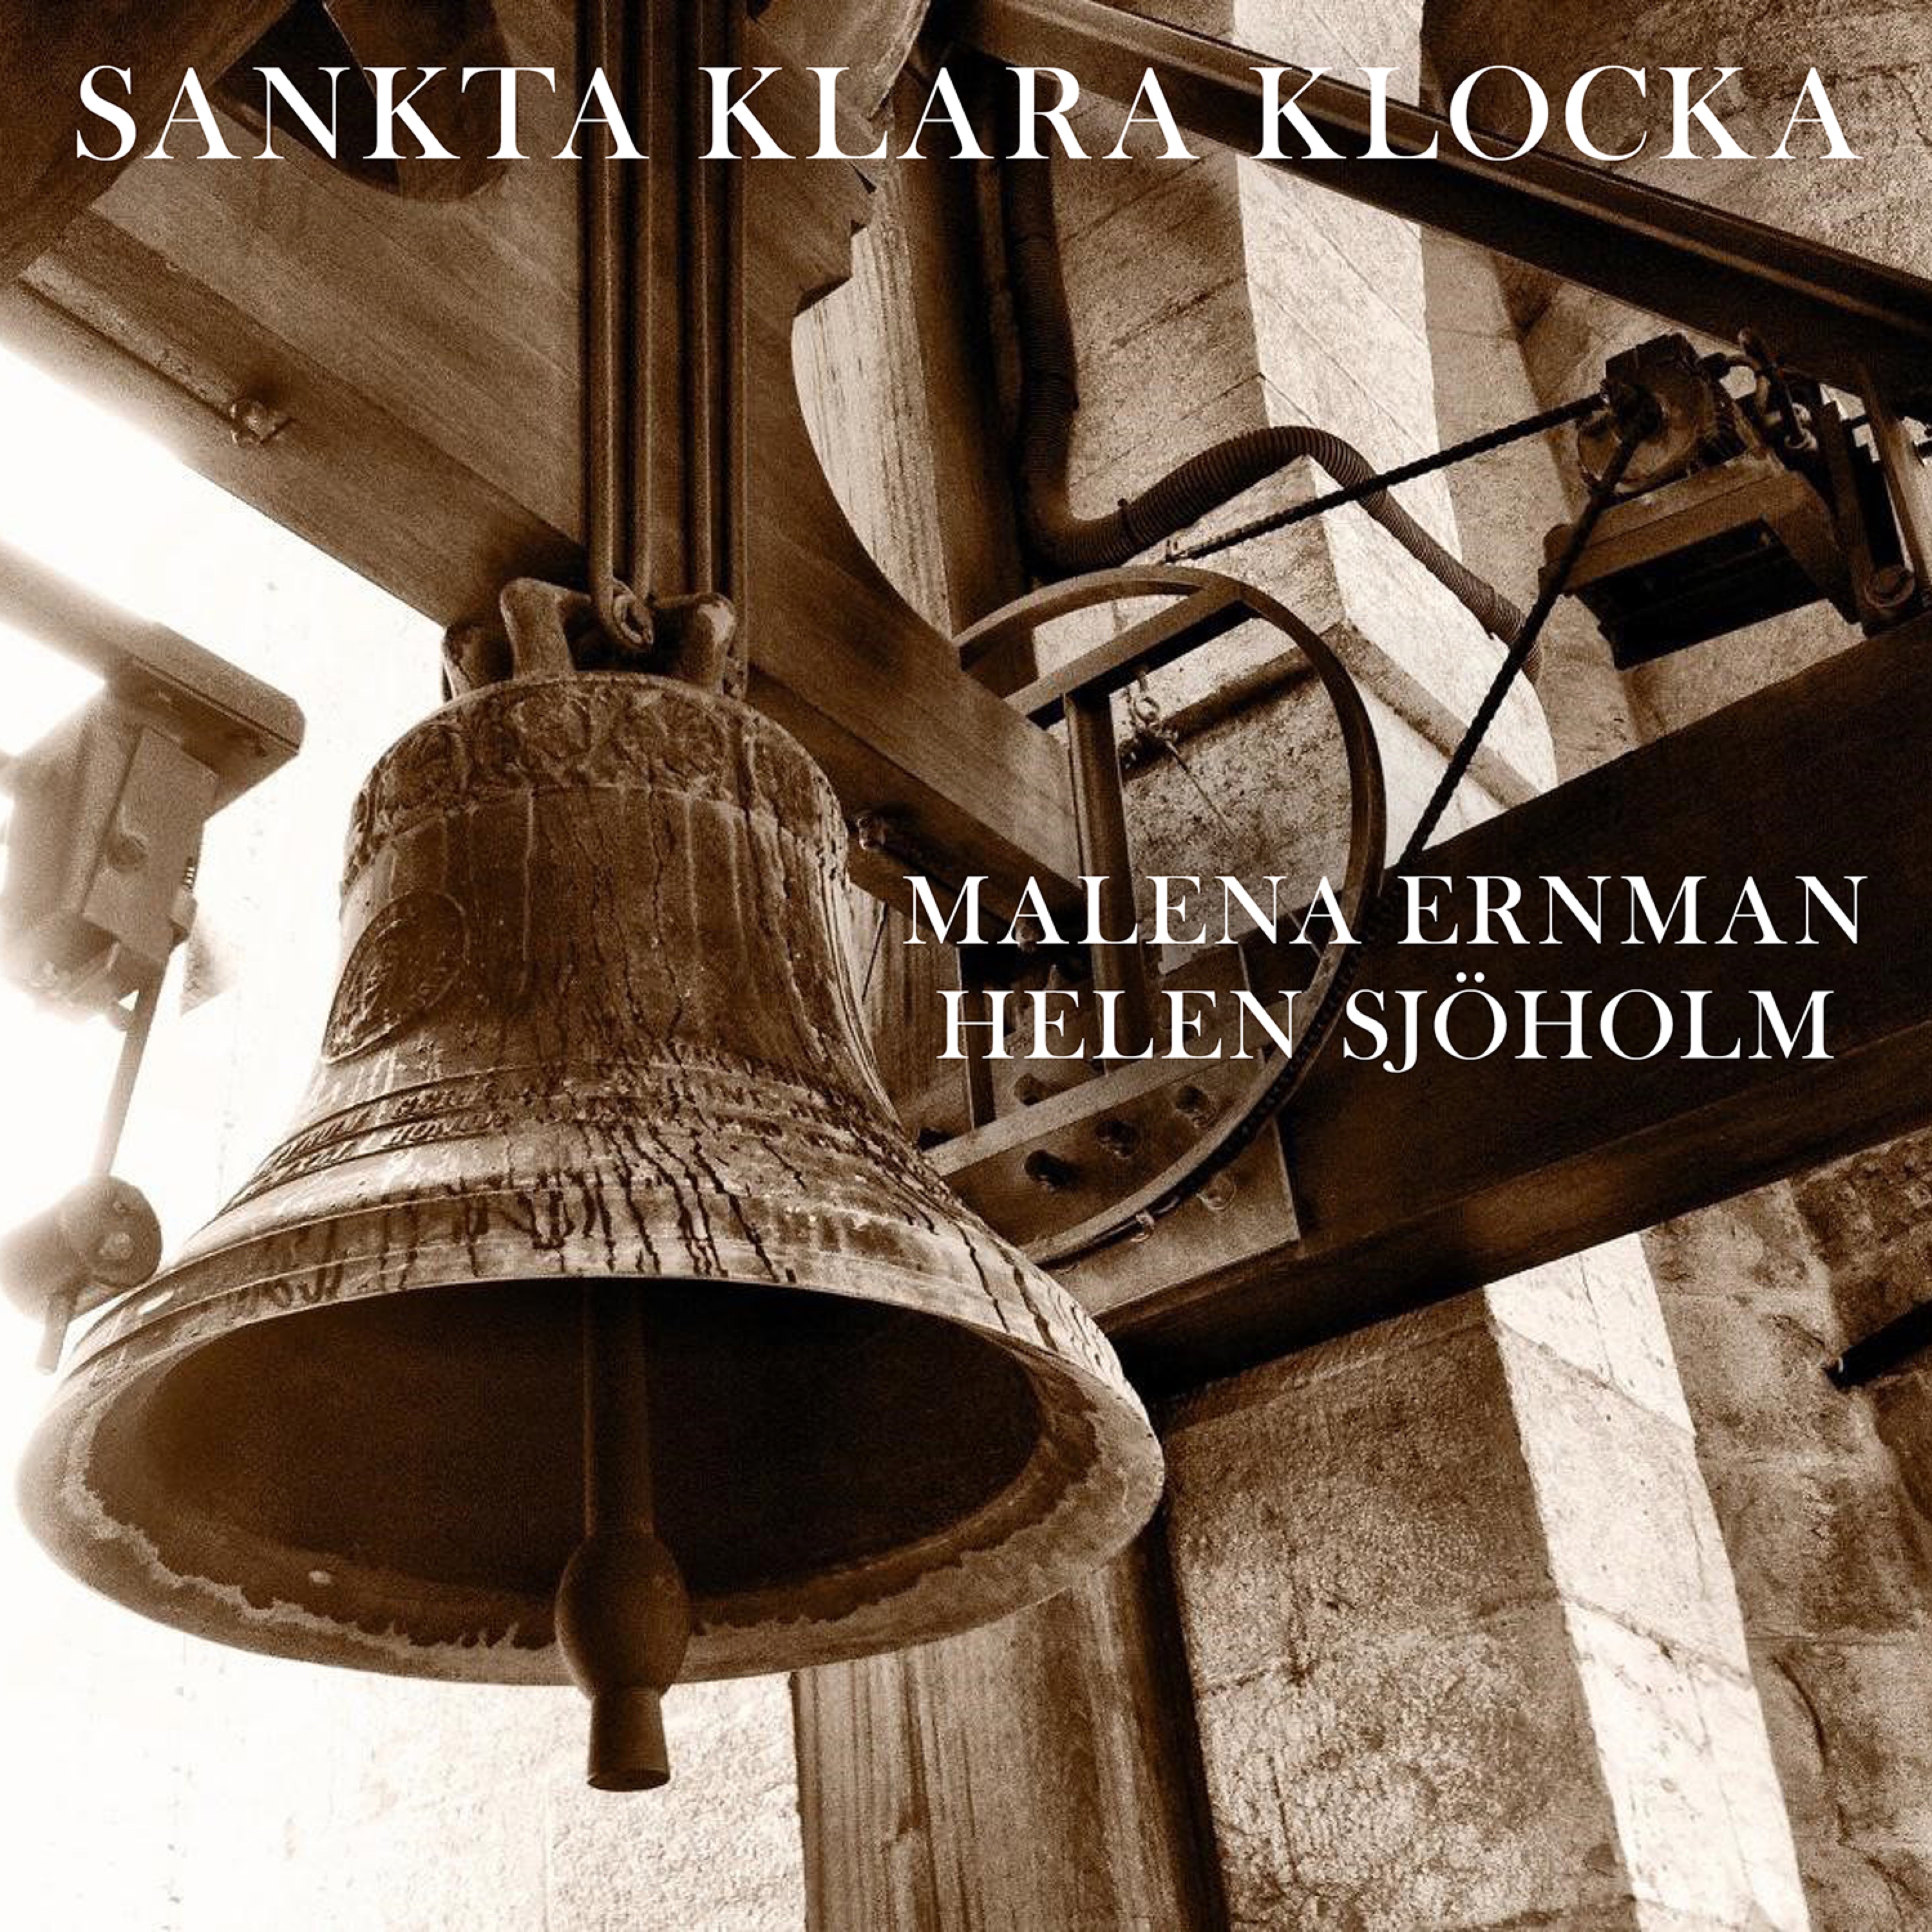 Malena Ernman & Helen Sj holm - Sankta Klara Klocka - CDS